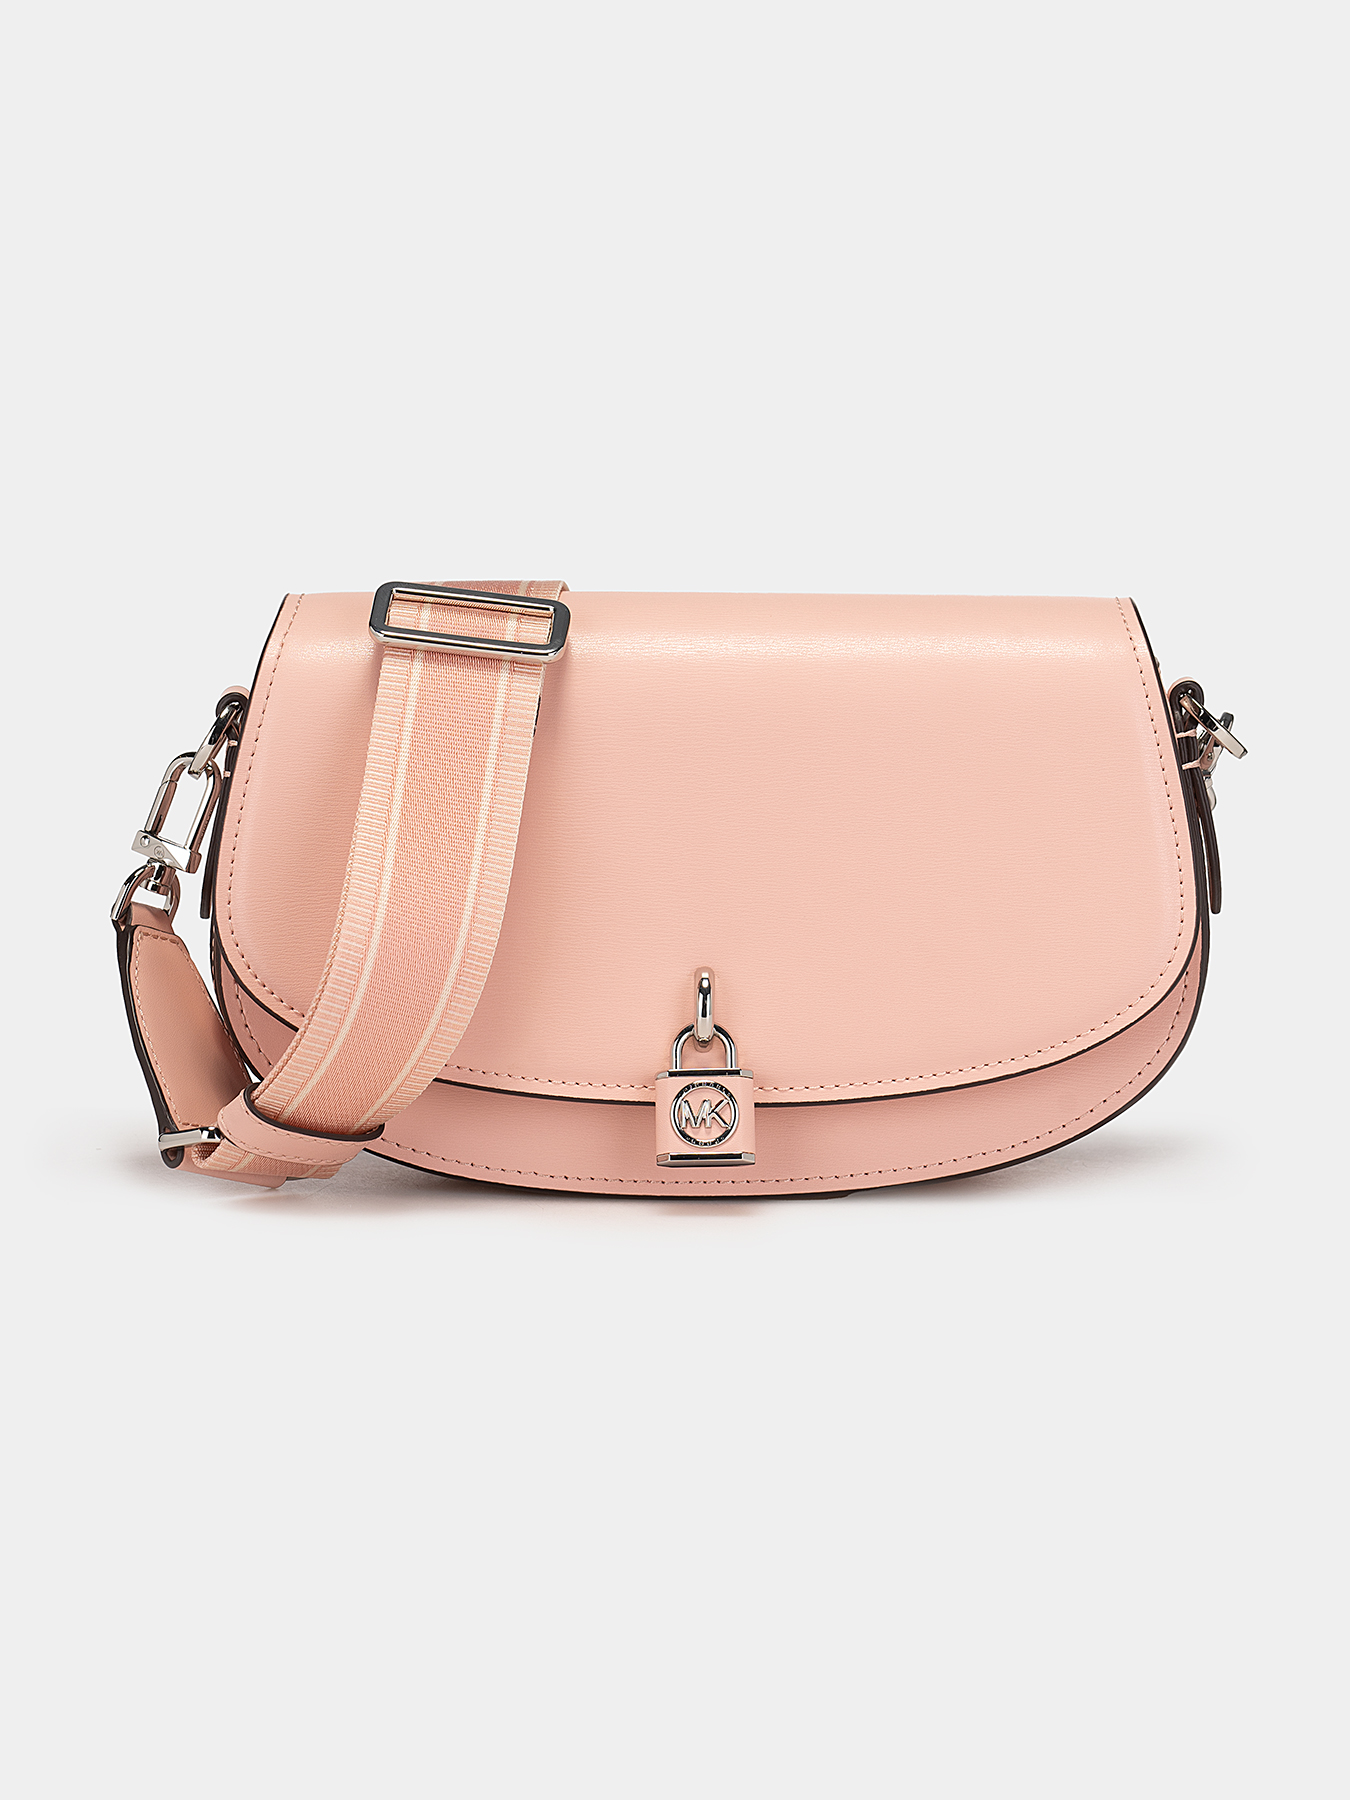 Pink crossbody bag with logo accent brand MICHAEL KORS —  /en